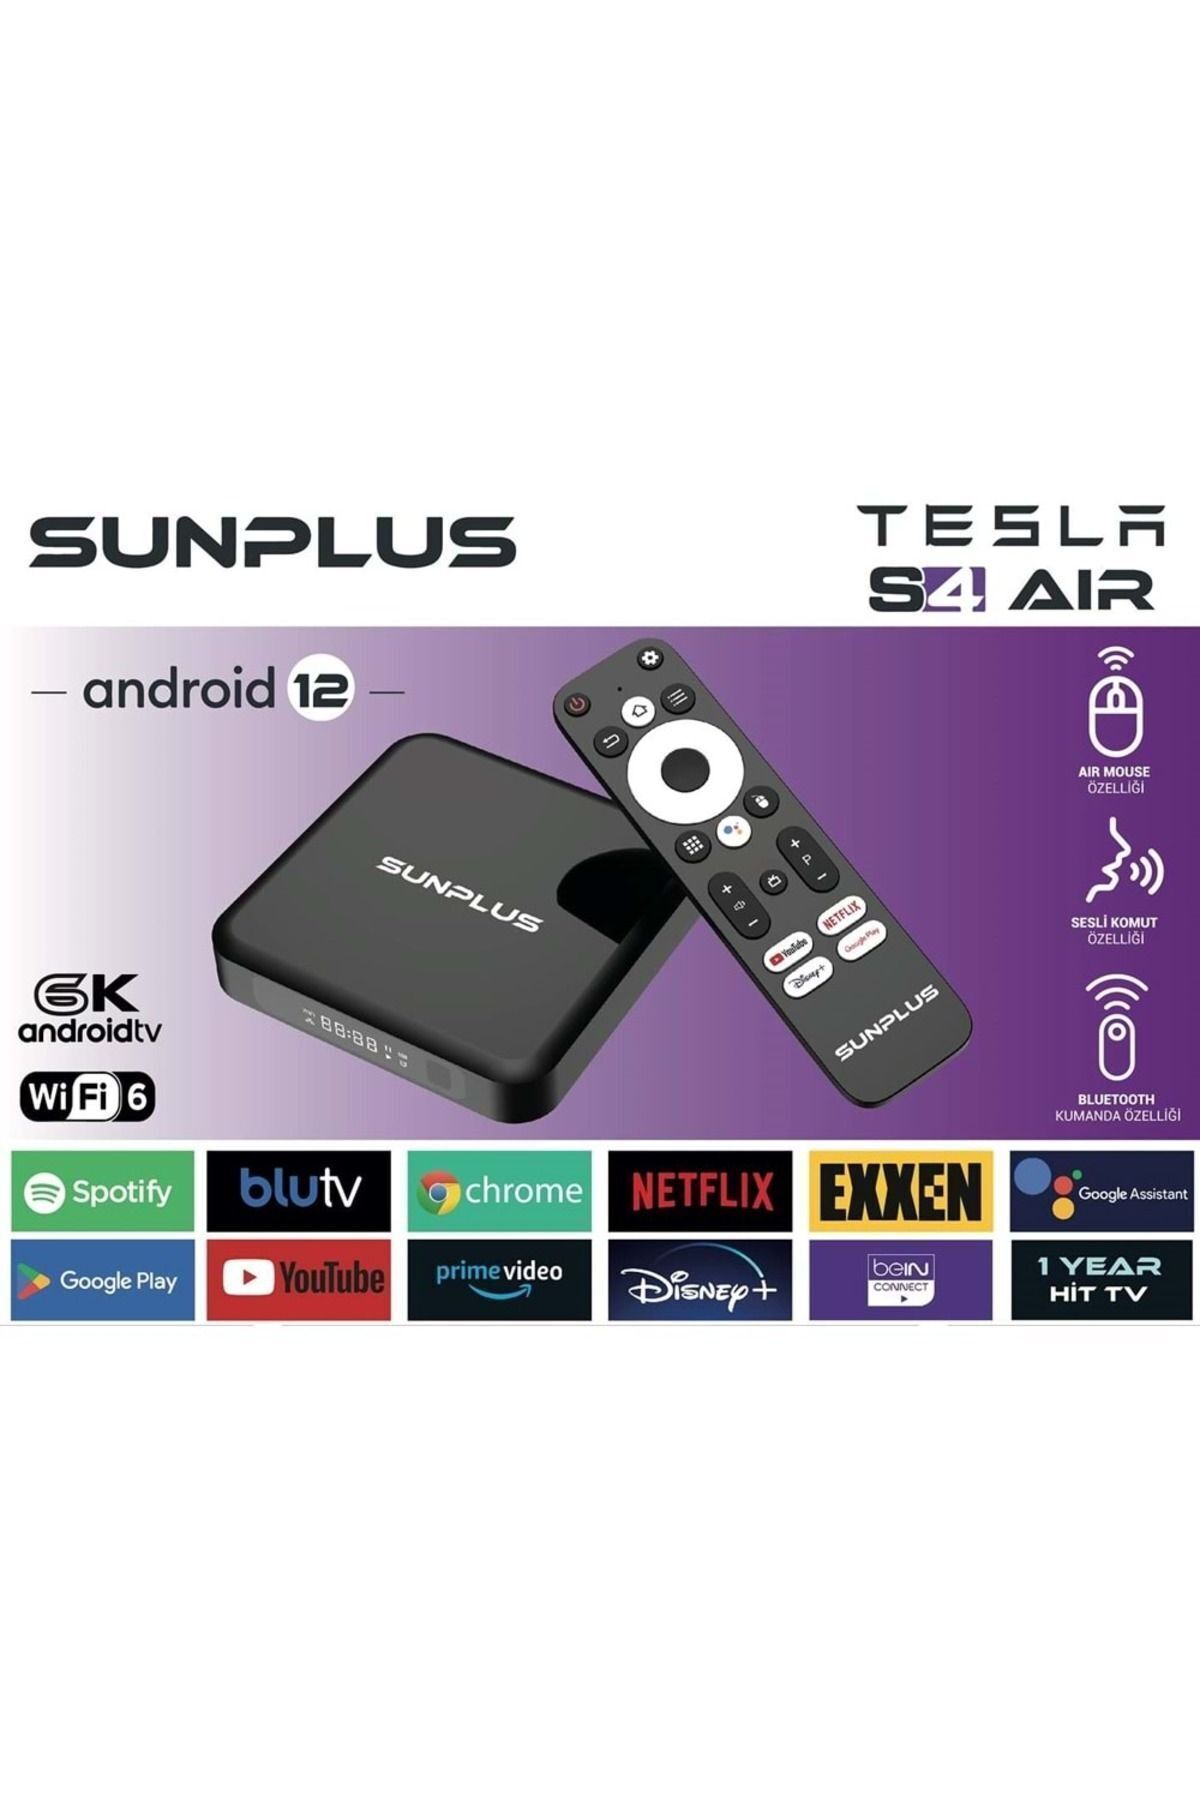 Sunplus Tesla S 4 AİR Android Tv Box 4gb Ram -32 gb Hafıza Android 12 Tvbox -4 k 3840*2160 p Wİ-Fİ 6